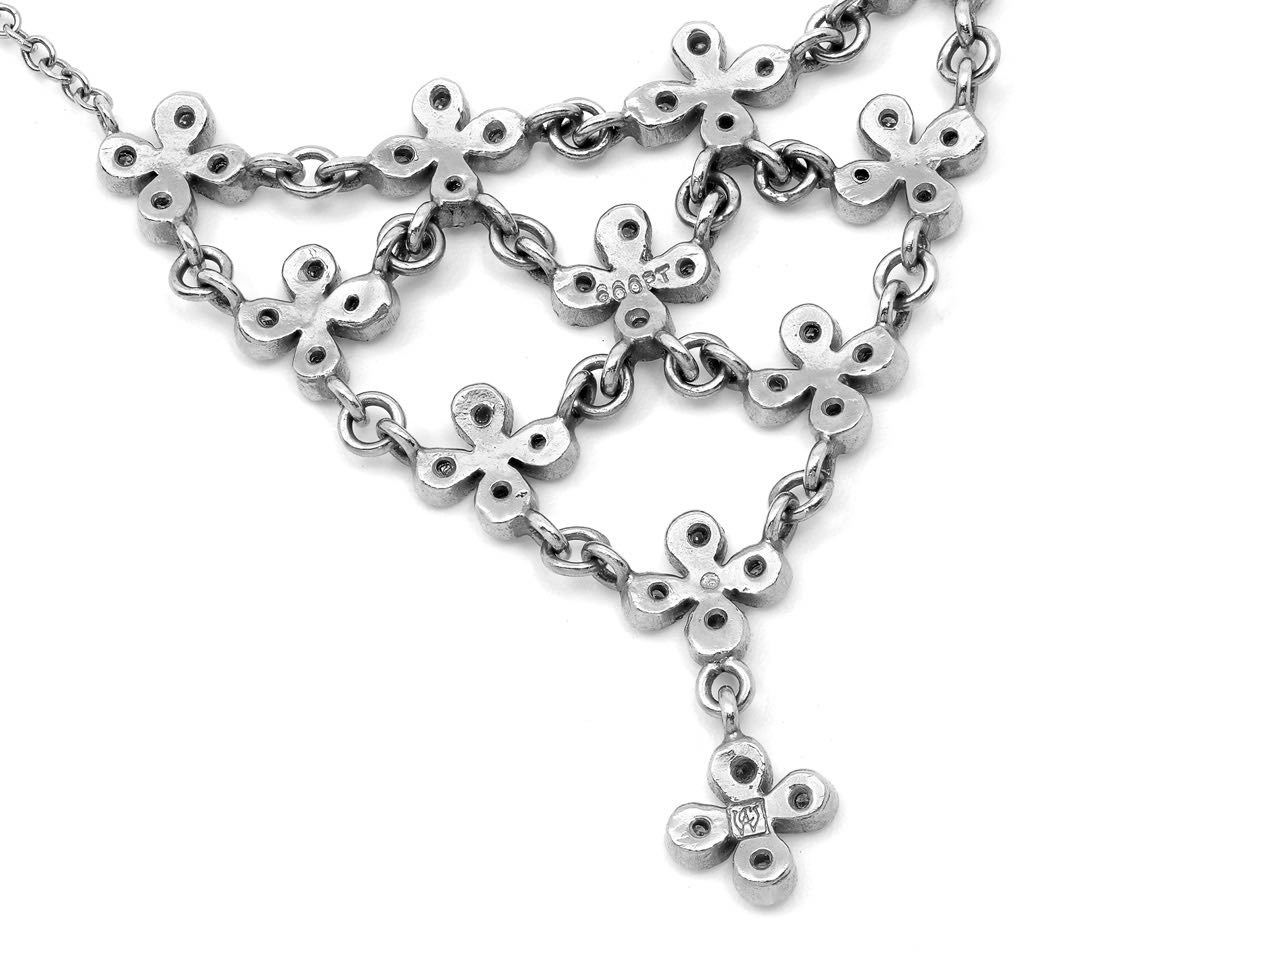 Cathy Waterman Diamond Petal Necklace in Platinum